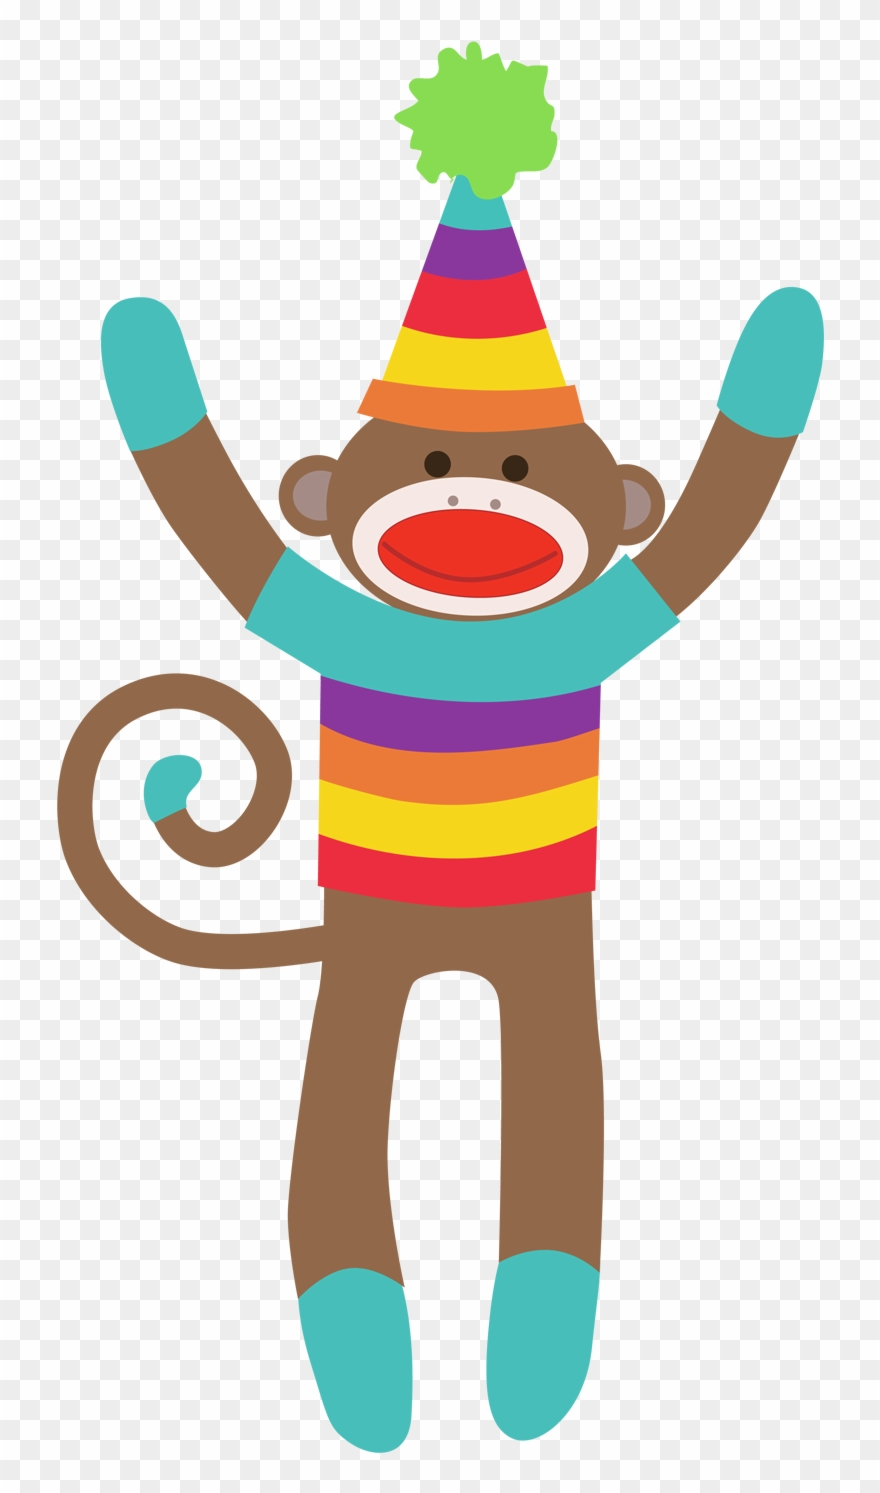 Sock Monkey Clipart Free Download Clip Art On - Colorful Sock Monkey - Free Printable Sock Monkey Pictures